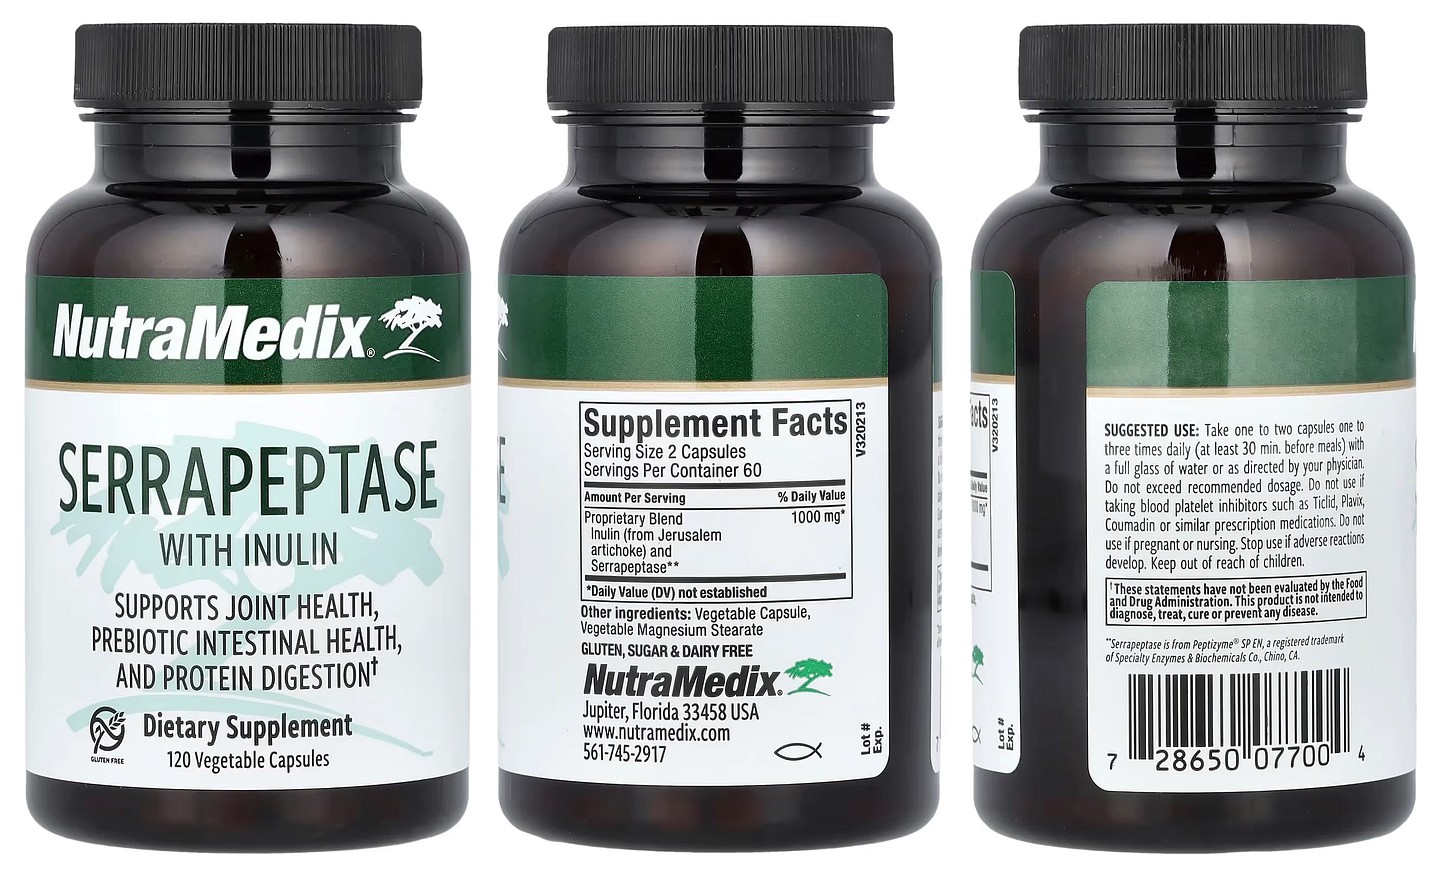 NutraMedix, Serrapeptase with Inulin packaging